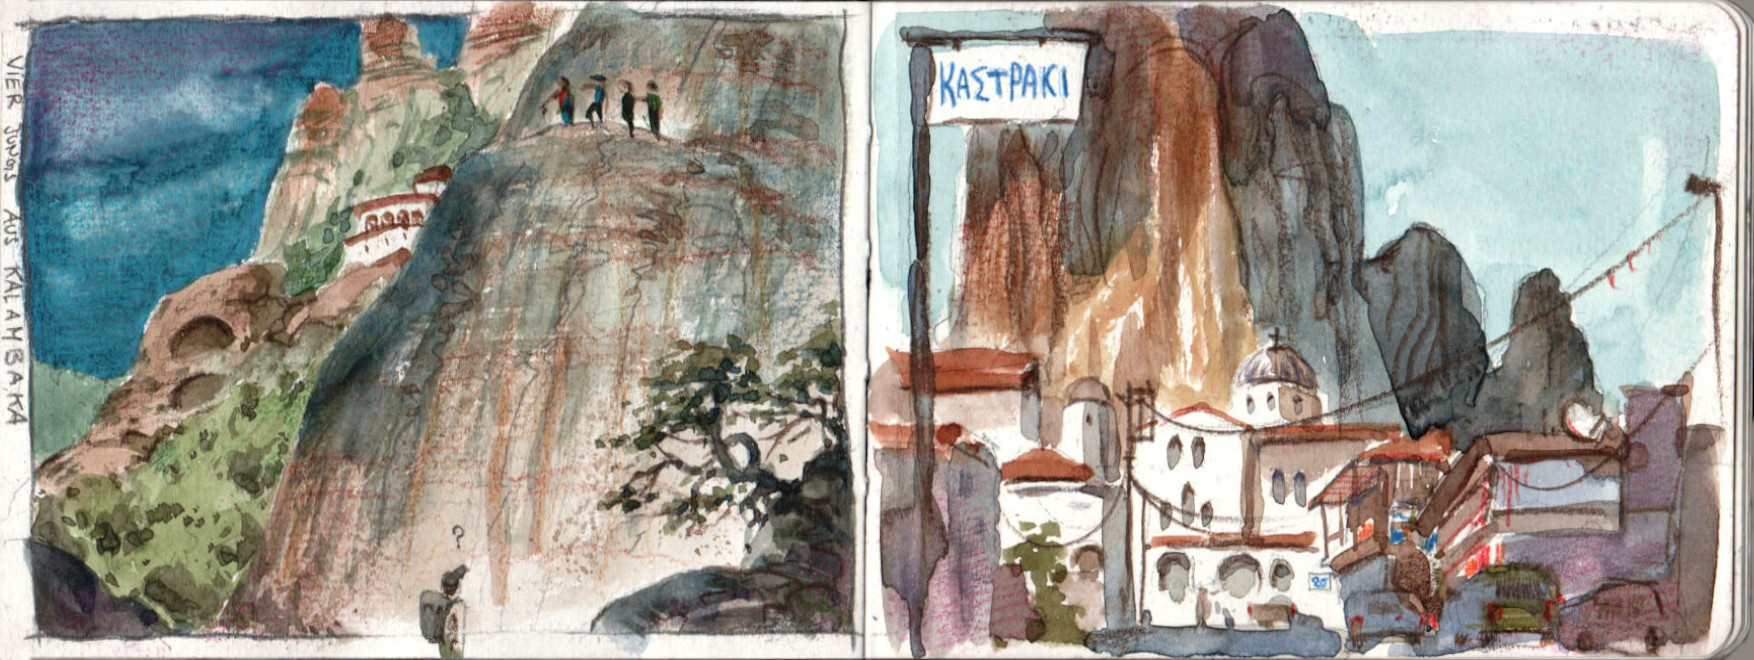 Meteora Monasteries and a street in Kastraki